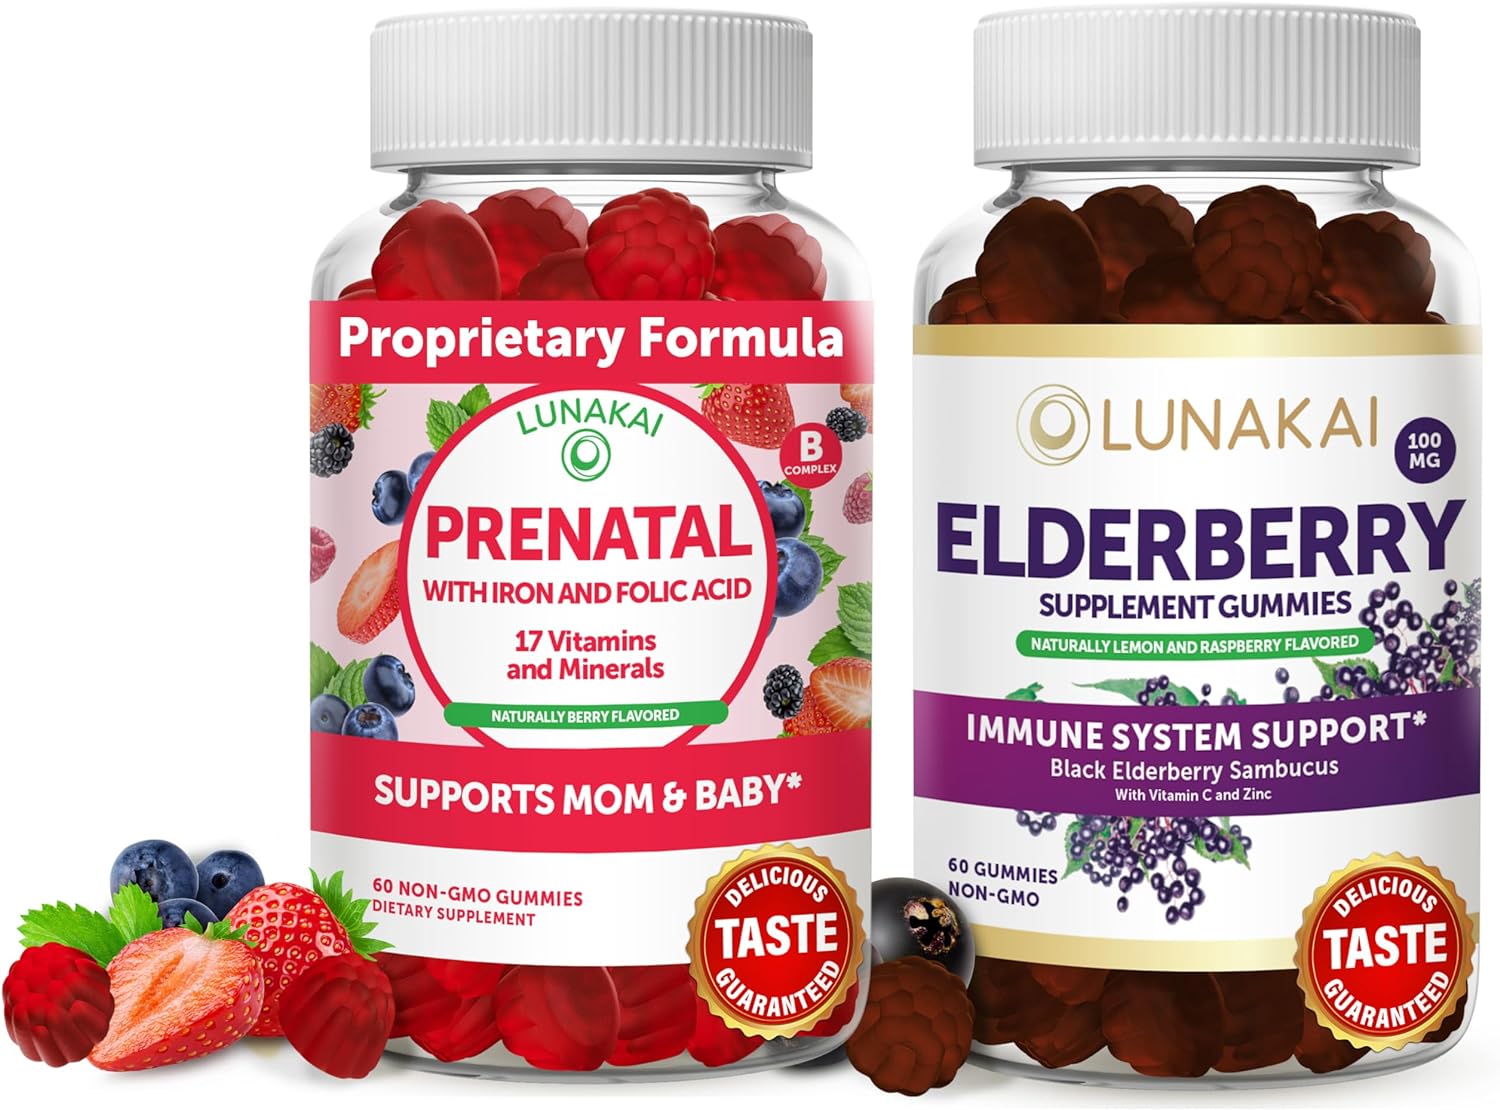 Prenatal and Elderberry Gummies Bundle - Non-GMO, Gluten Free, No Corn Syrup, All Natural Supplements- 60 ct Prenatal Gummies and 60 ct Elderberry Gummies - 30 Days Supply